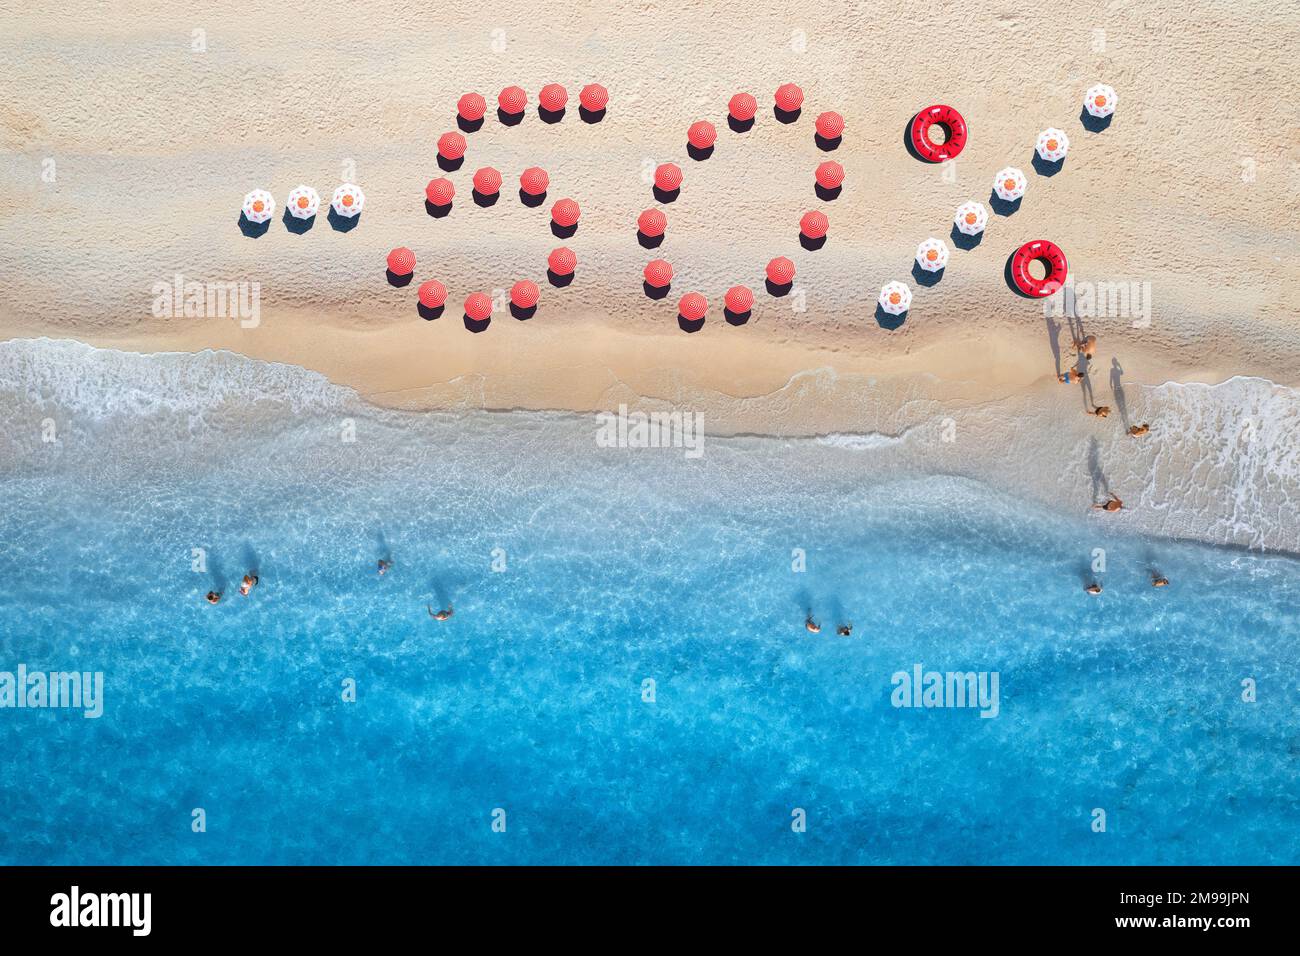 Creative text - 50 percent made from umbrellas on sandy beach Stock Photo